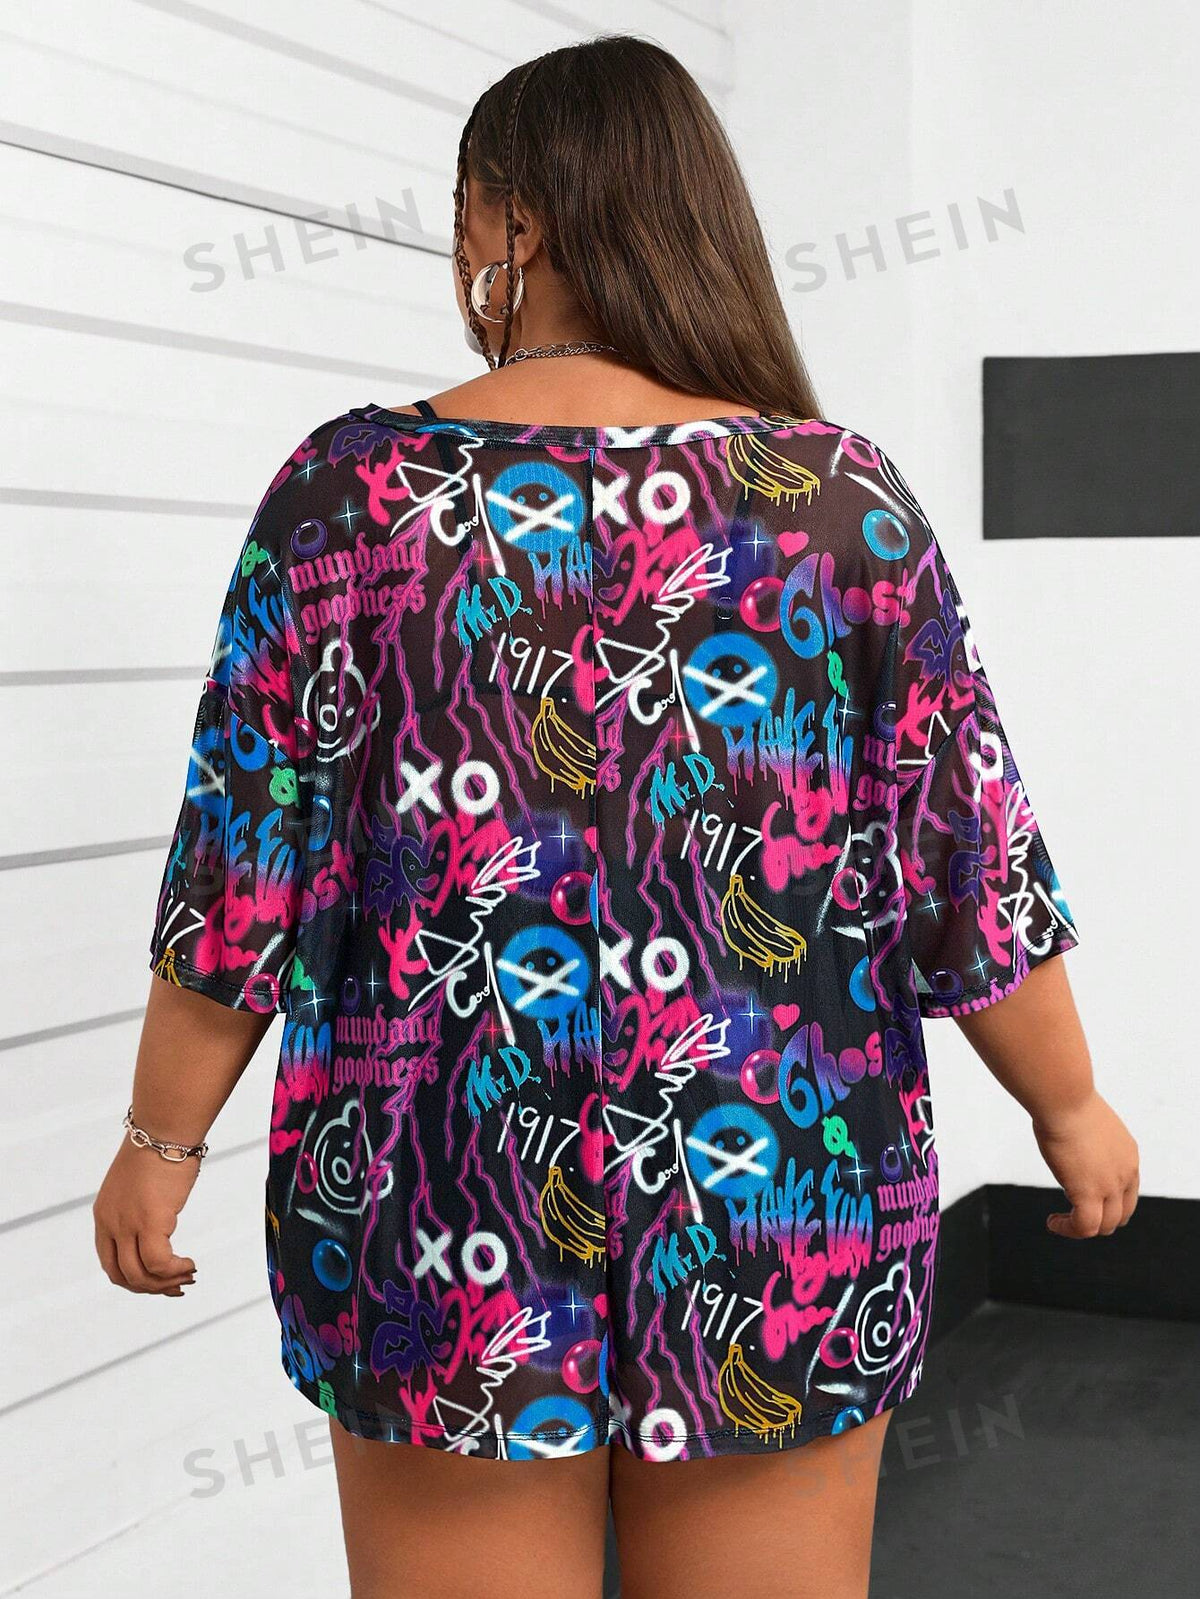 CURVE  Plus Size Summer Fashion Graffiti Print Mesh Loose T-Shirt With Sheer Details